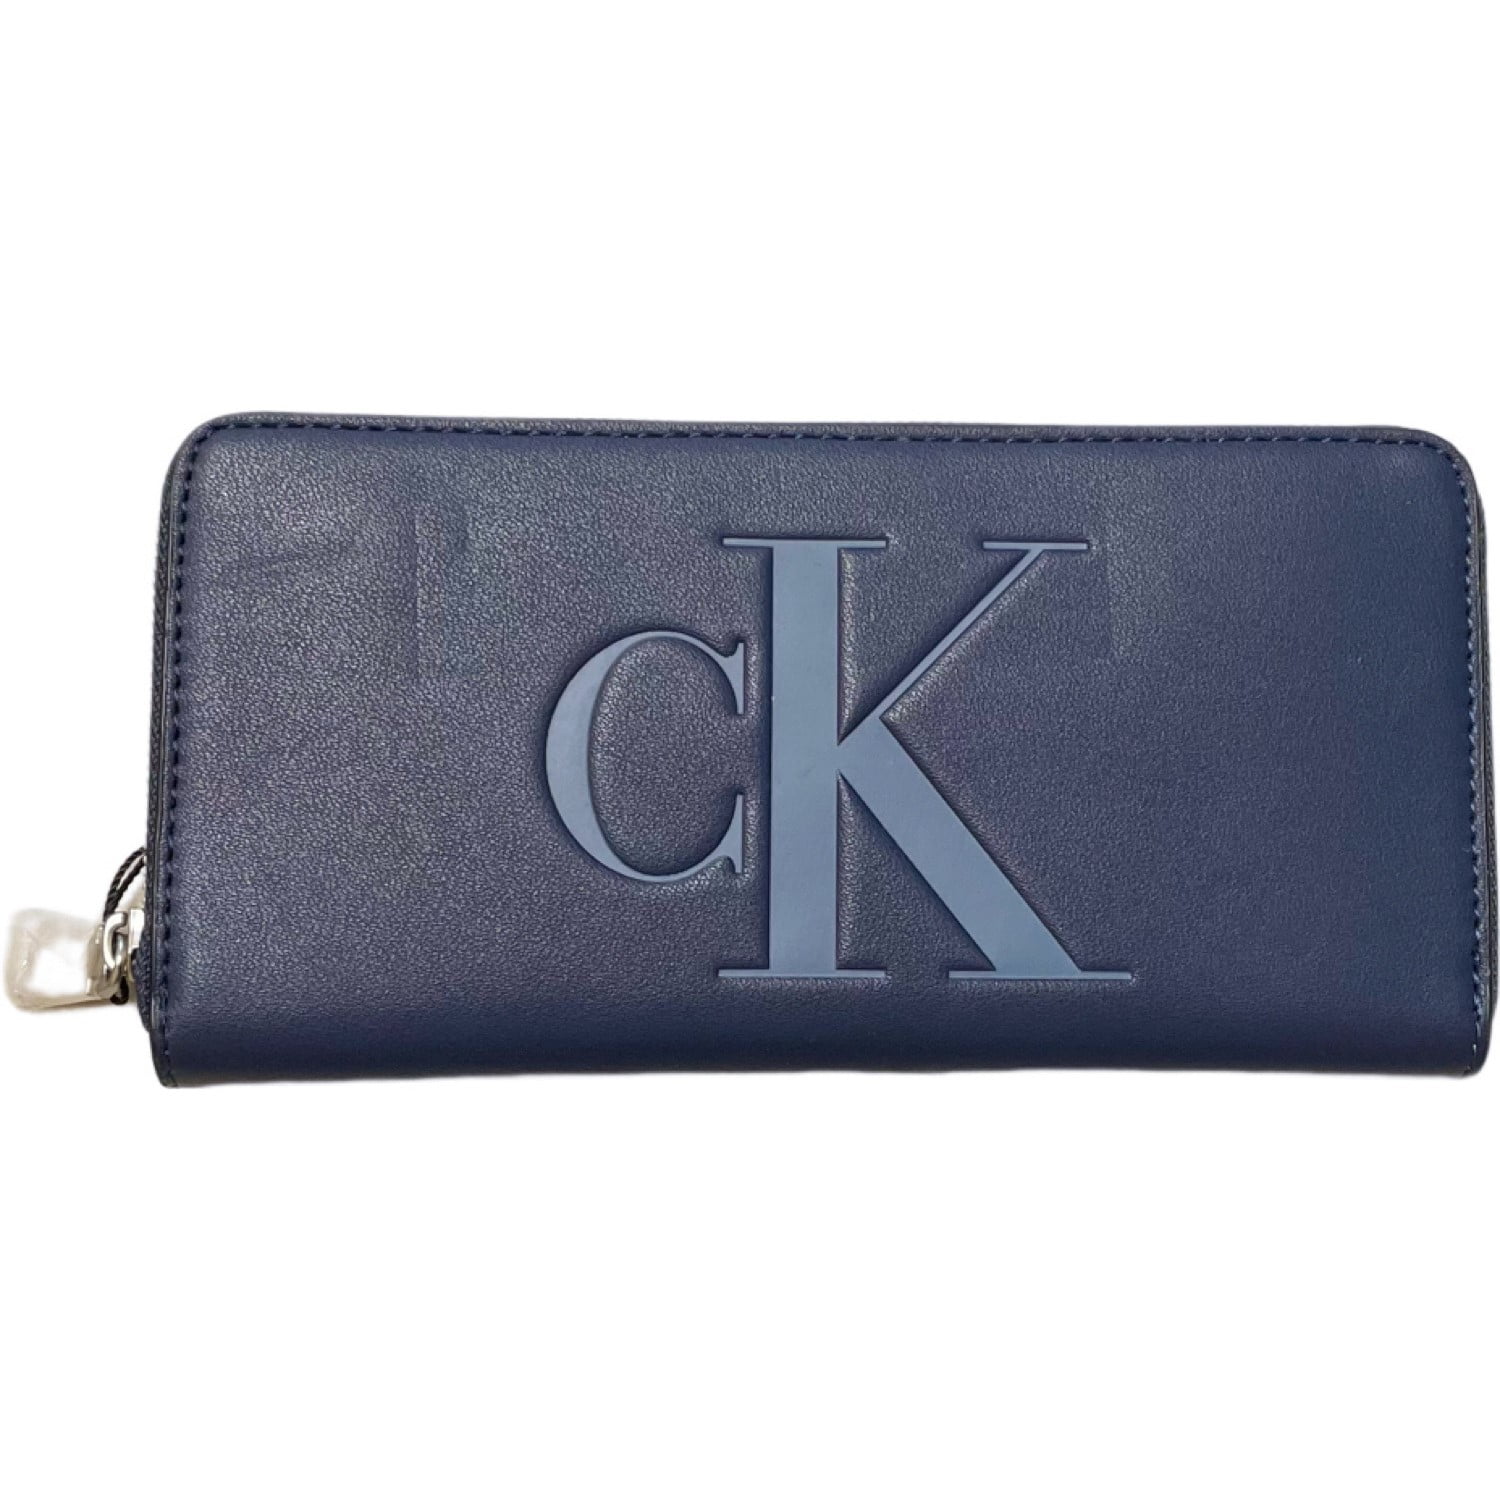 New Calvin Klein Embossed Monogram Brown Compact L Zip Wallet.100